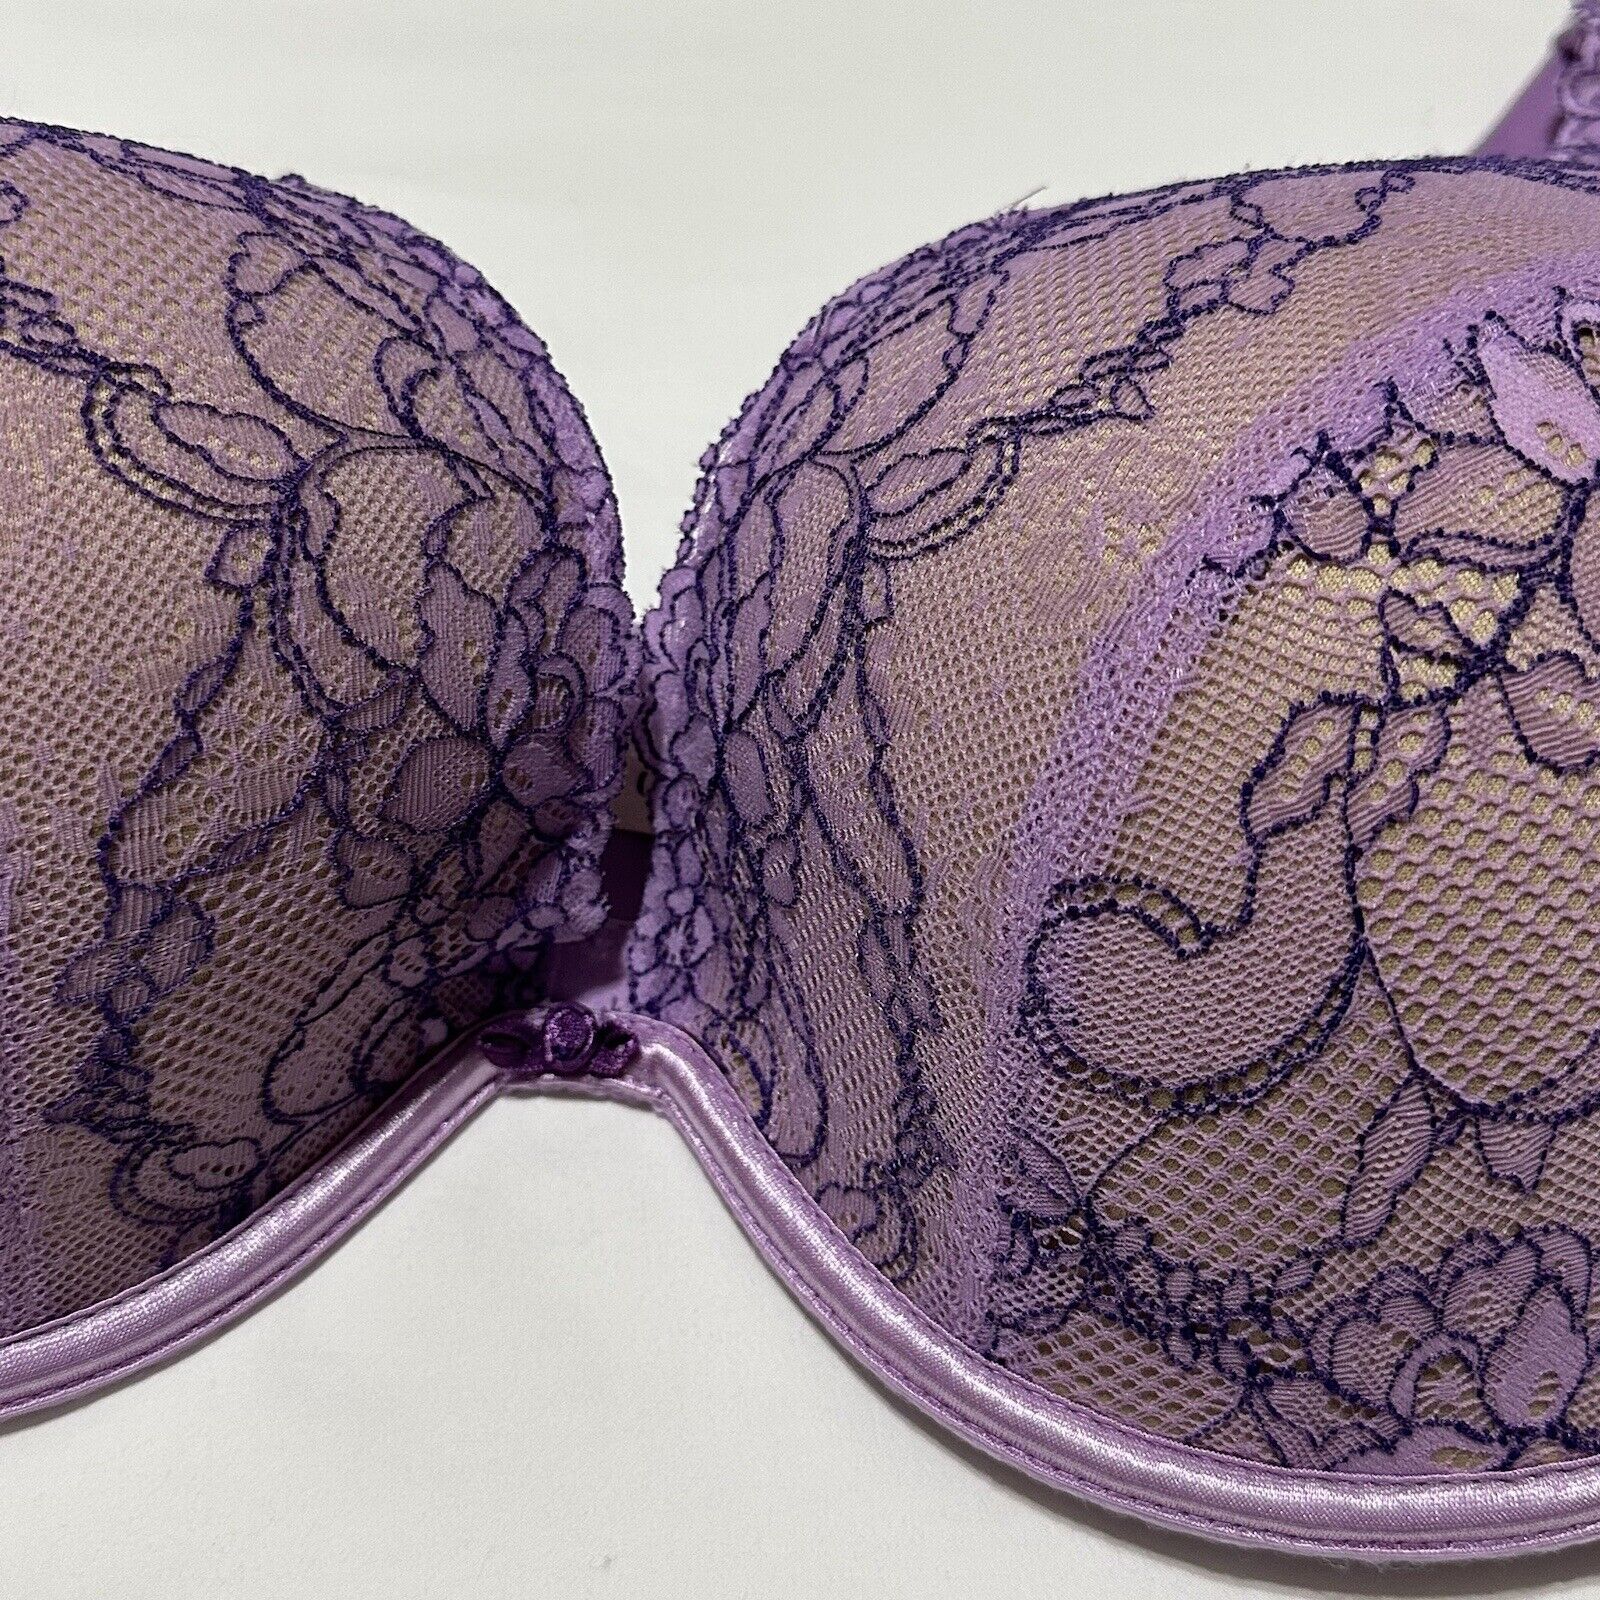 Cacique 44DD Purple / Nude Lace Padded Bra - image 2